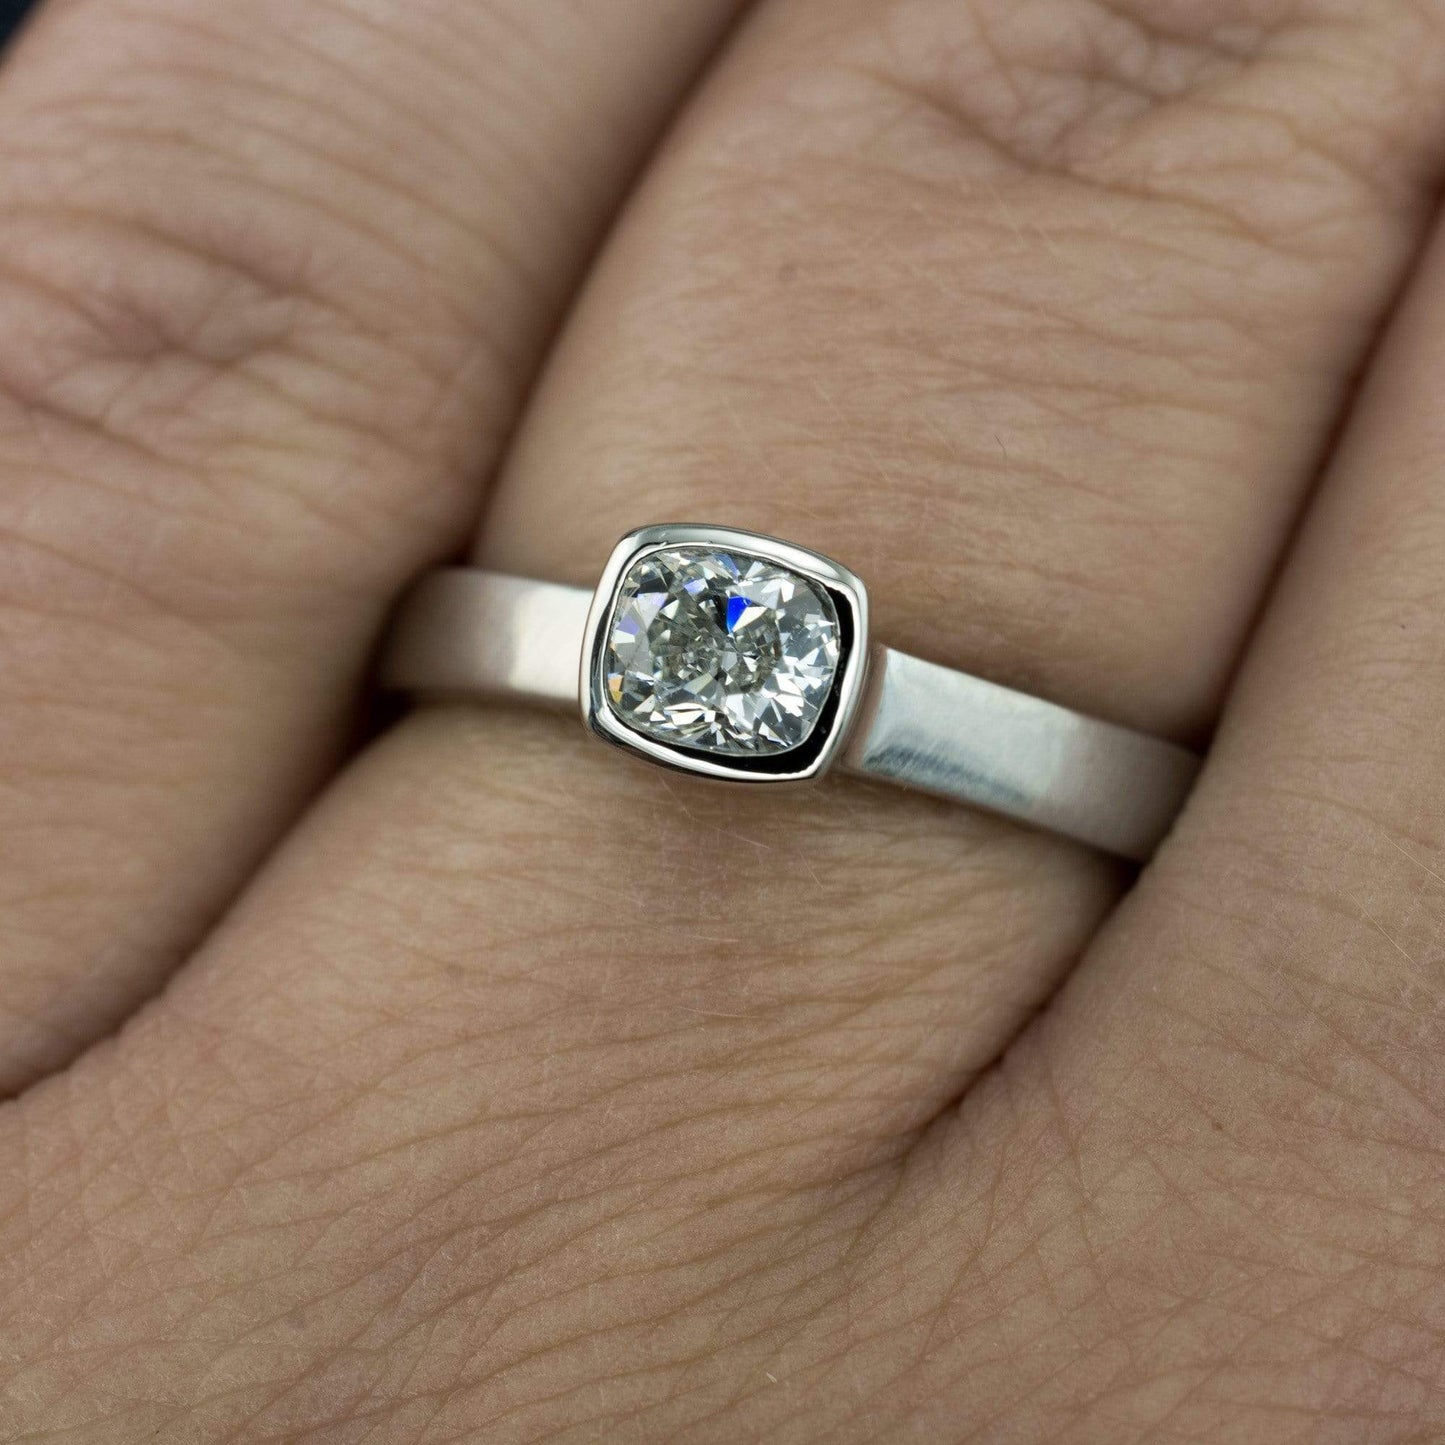 Cushion Cut Diamond Bezel Set Solitaire Engagement Ring Ring by Nodeform